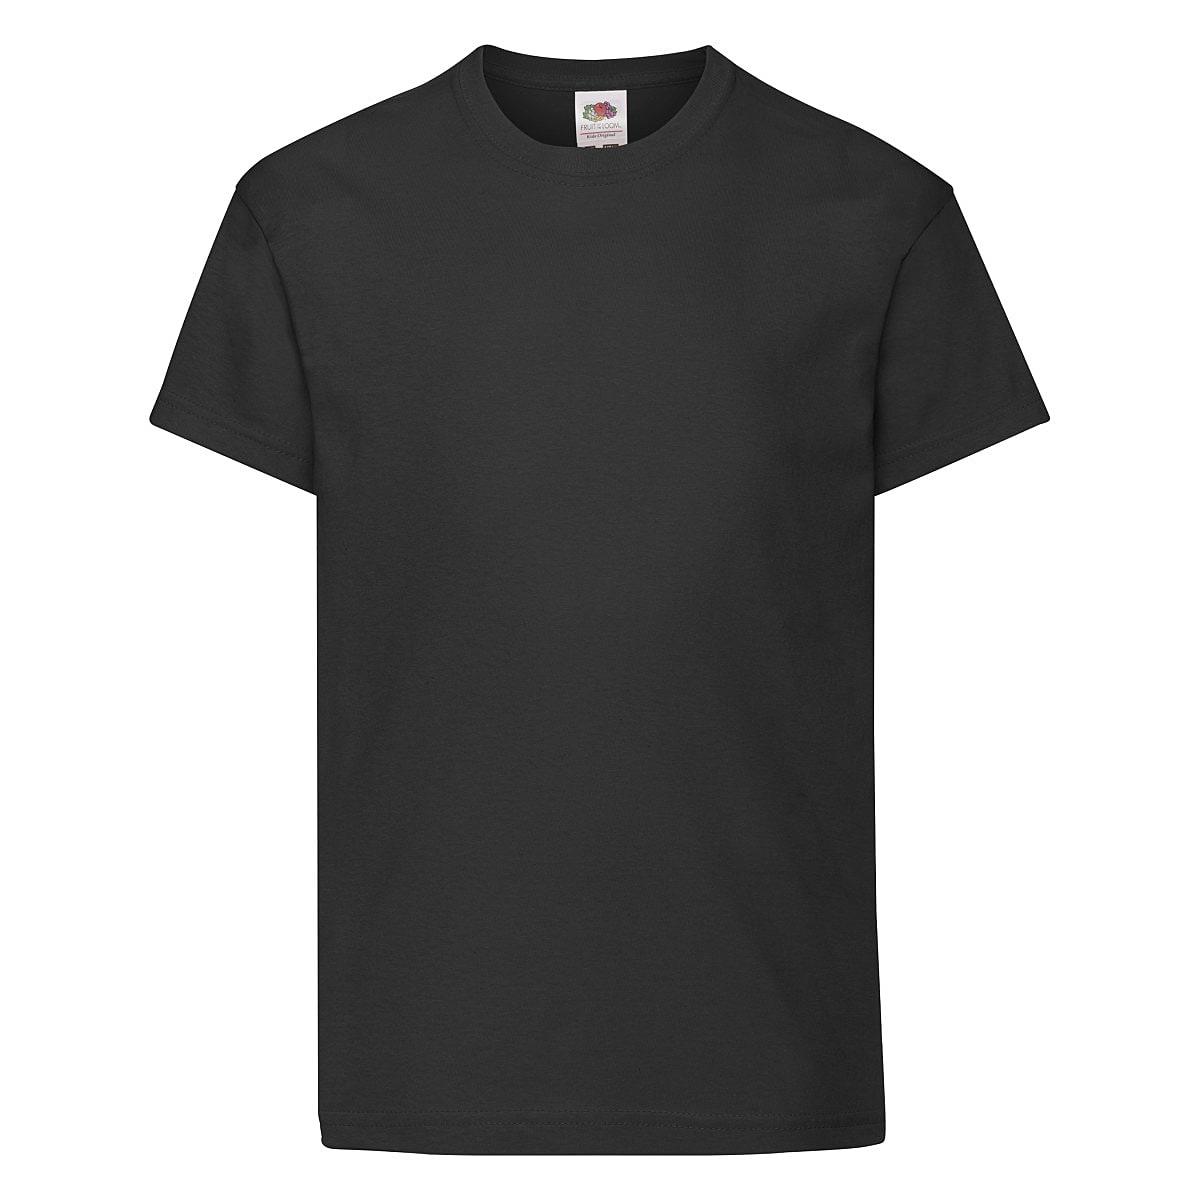 Fruit Of The Loom Kids Original T-Shirt in Black (Product Code: 61019)